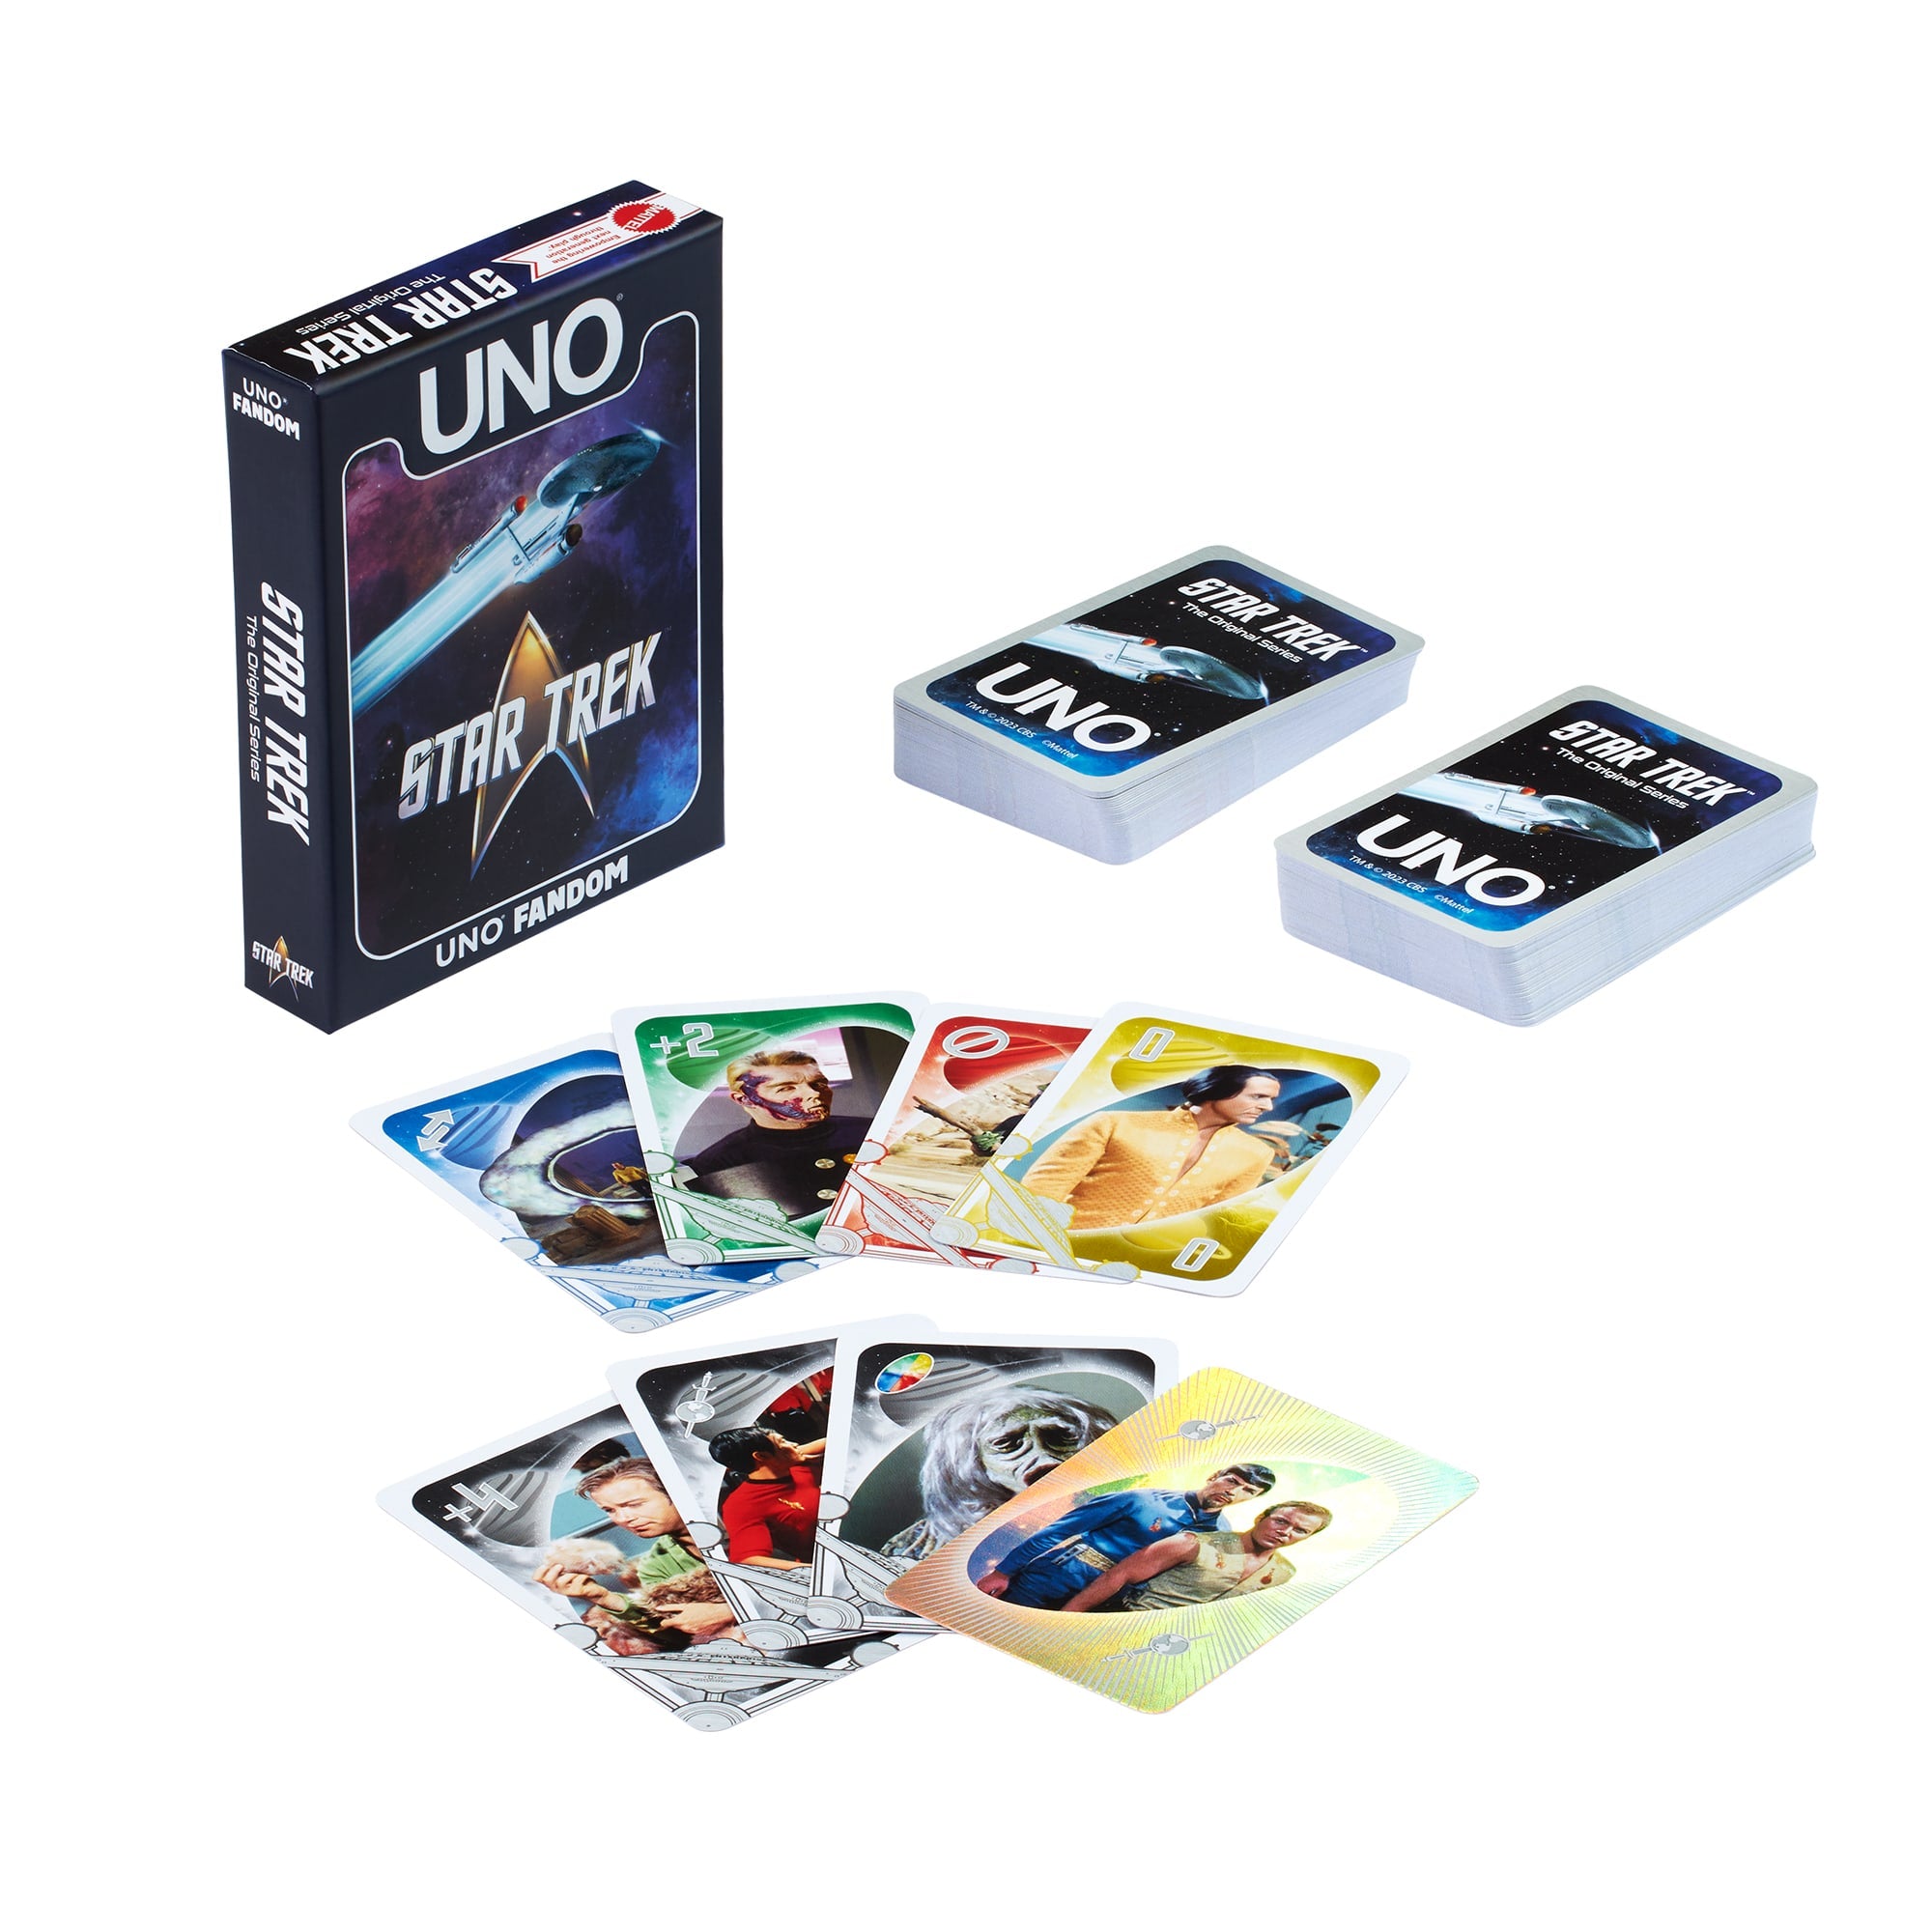 UNO Fandom Star Trek: The Original Series Game Deck